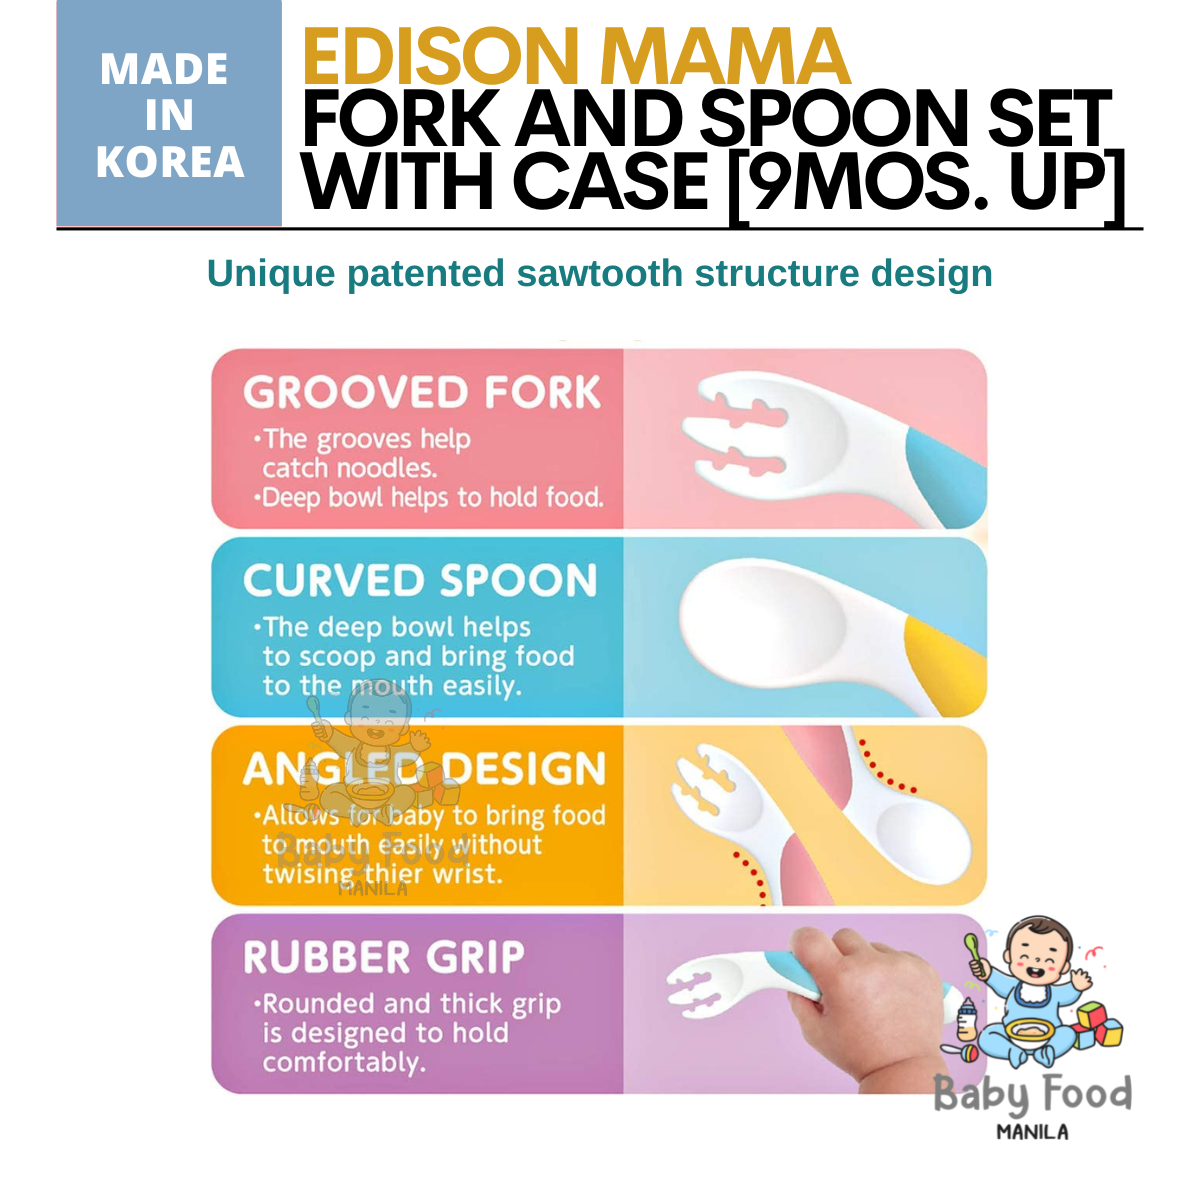 EDISON MAMA Spoon & Fork set with travel case (Tan & White